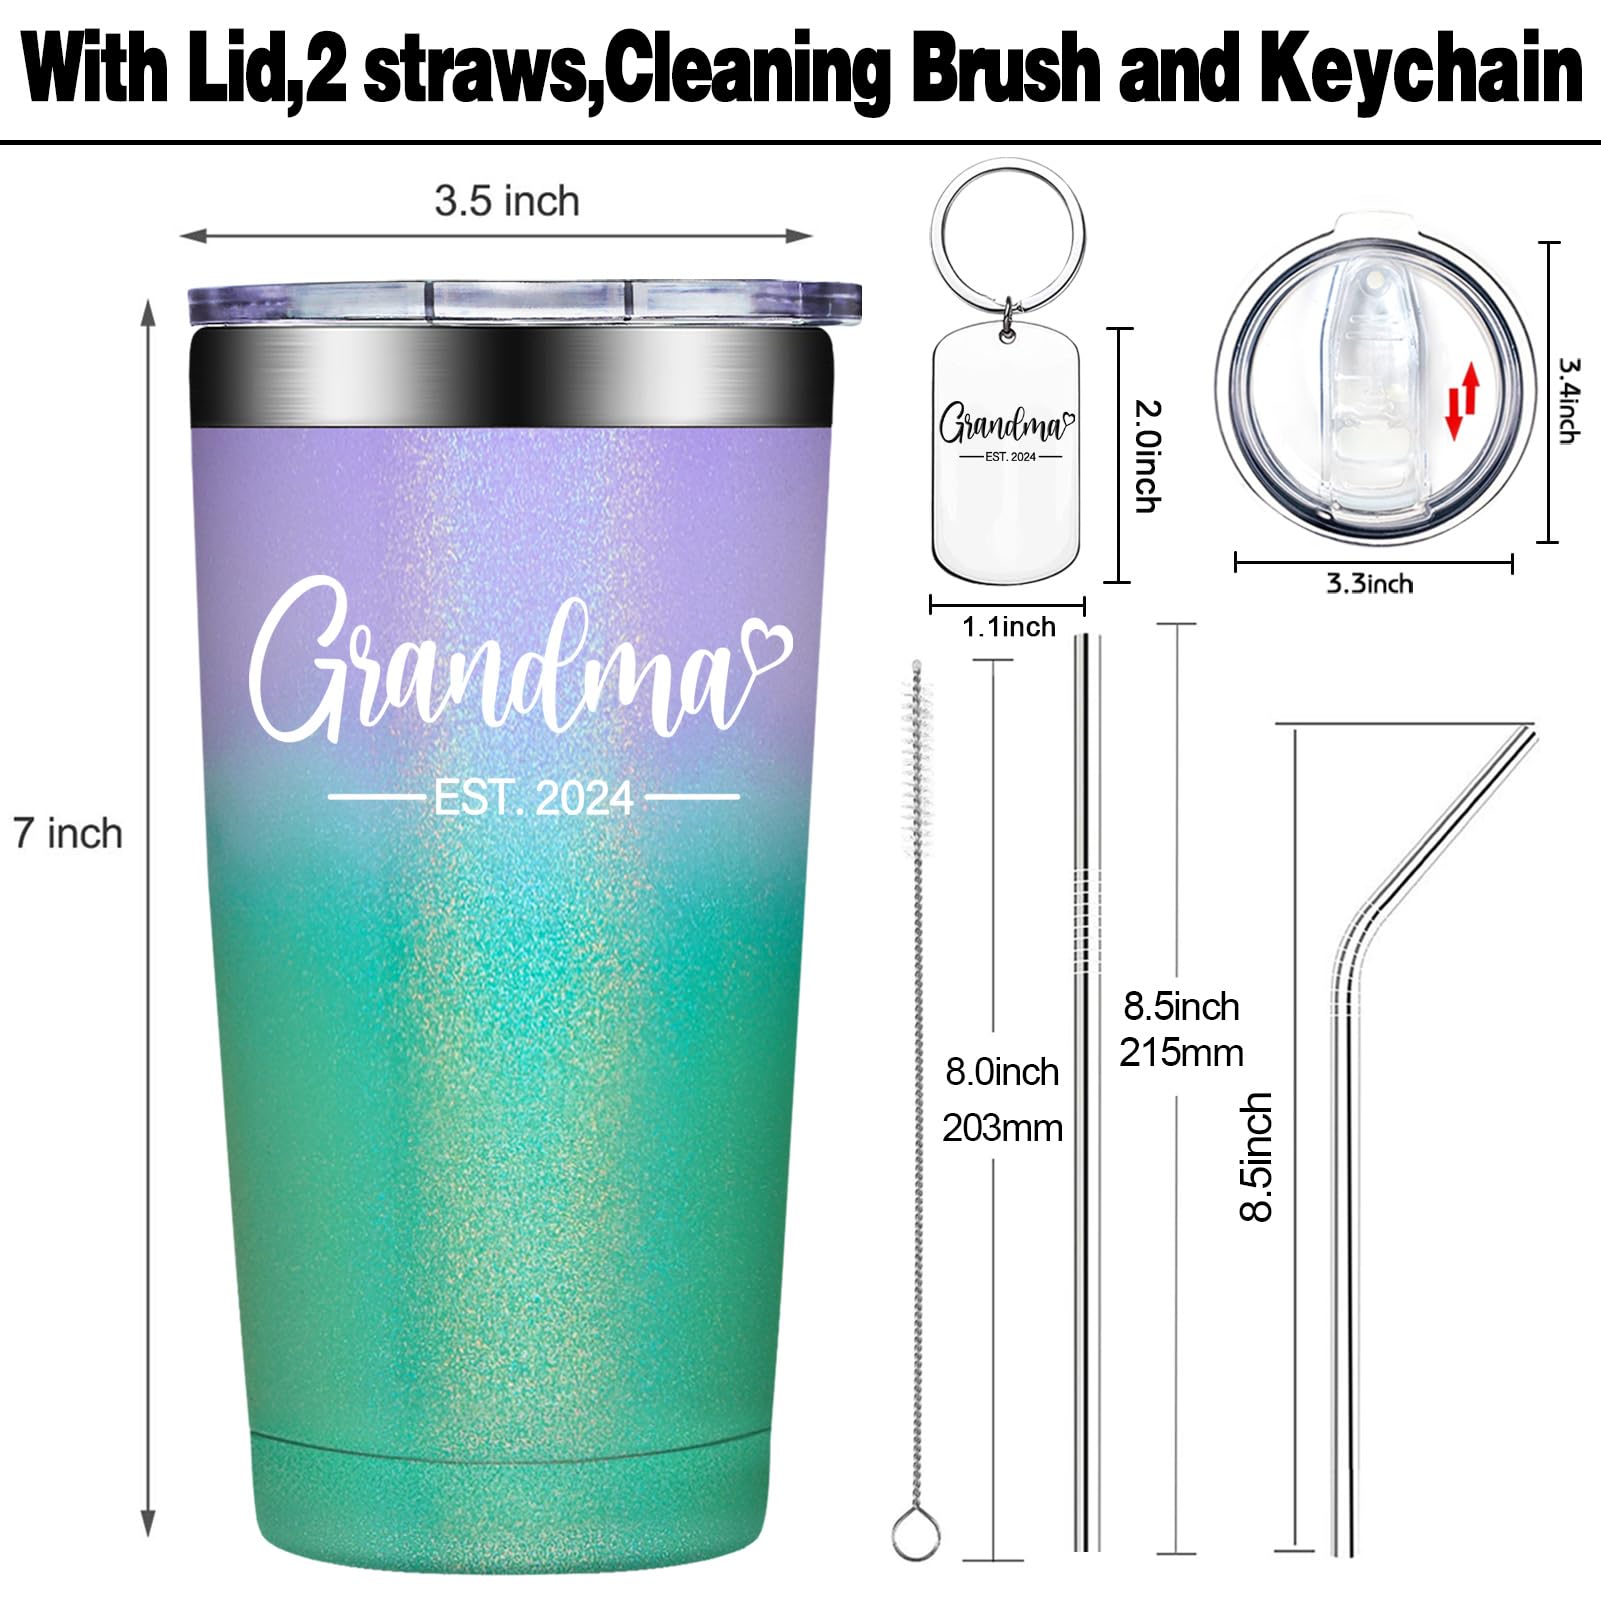 Grifarny New Grandma Gifts - Grandma Est. 2024 Tumbler Cup - First Time Grandma Gifts - 1st Mothers Day Gift for New Grandma, New Grandmother, Grandma to be, Promoted to Grandma